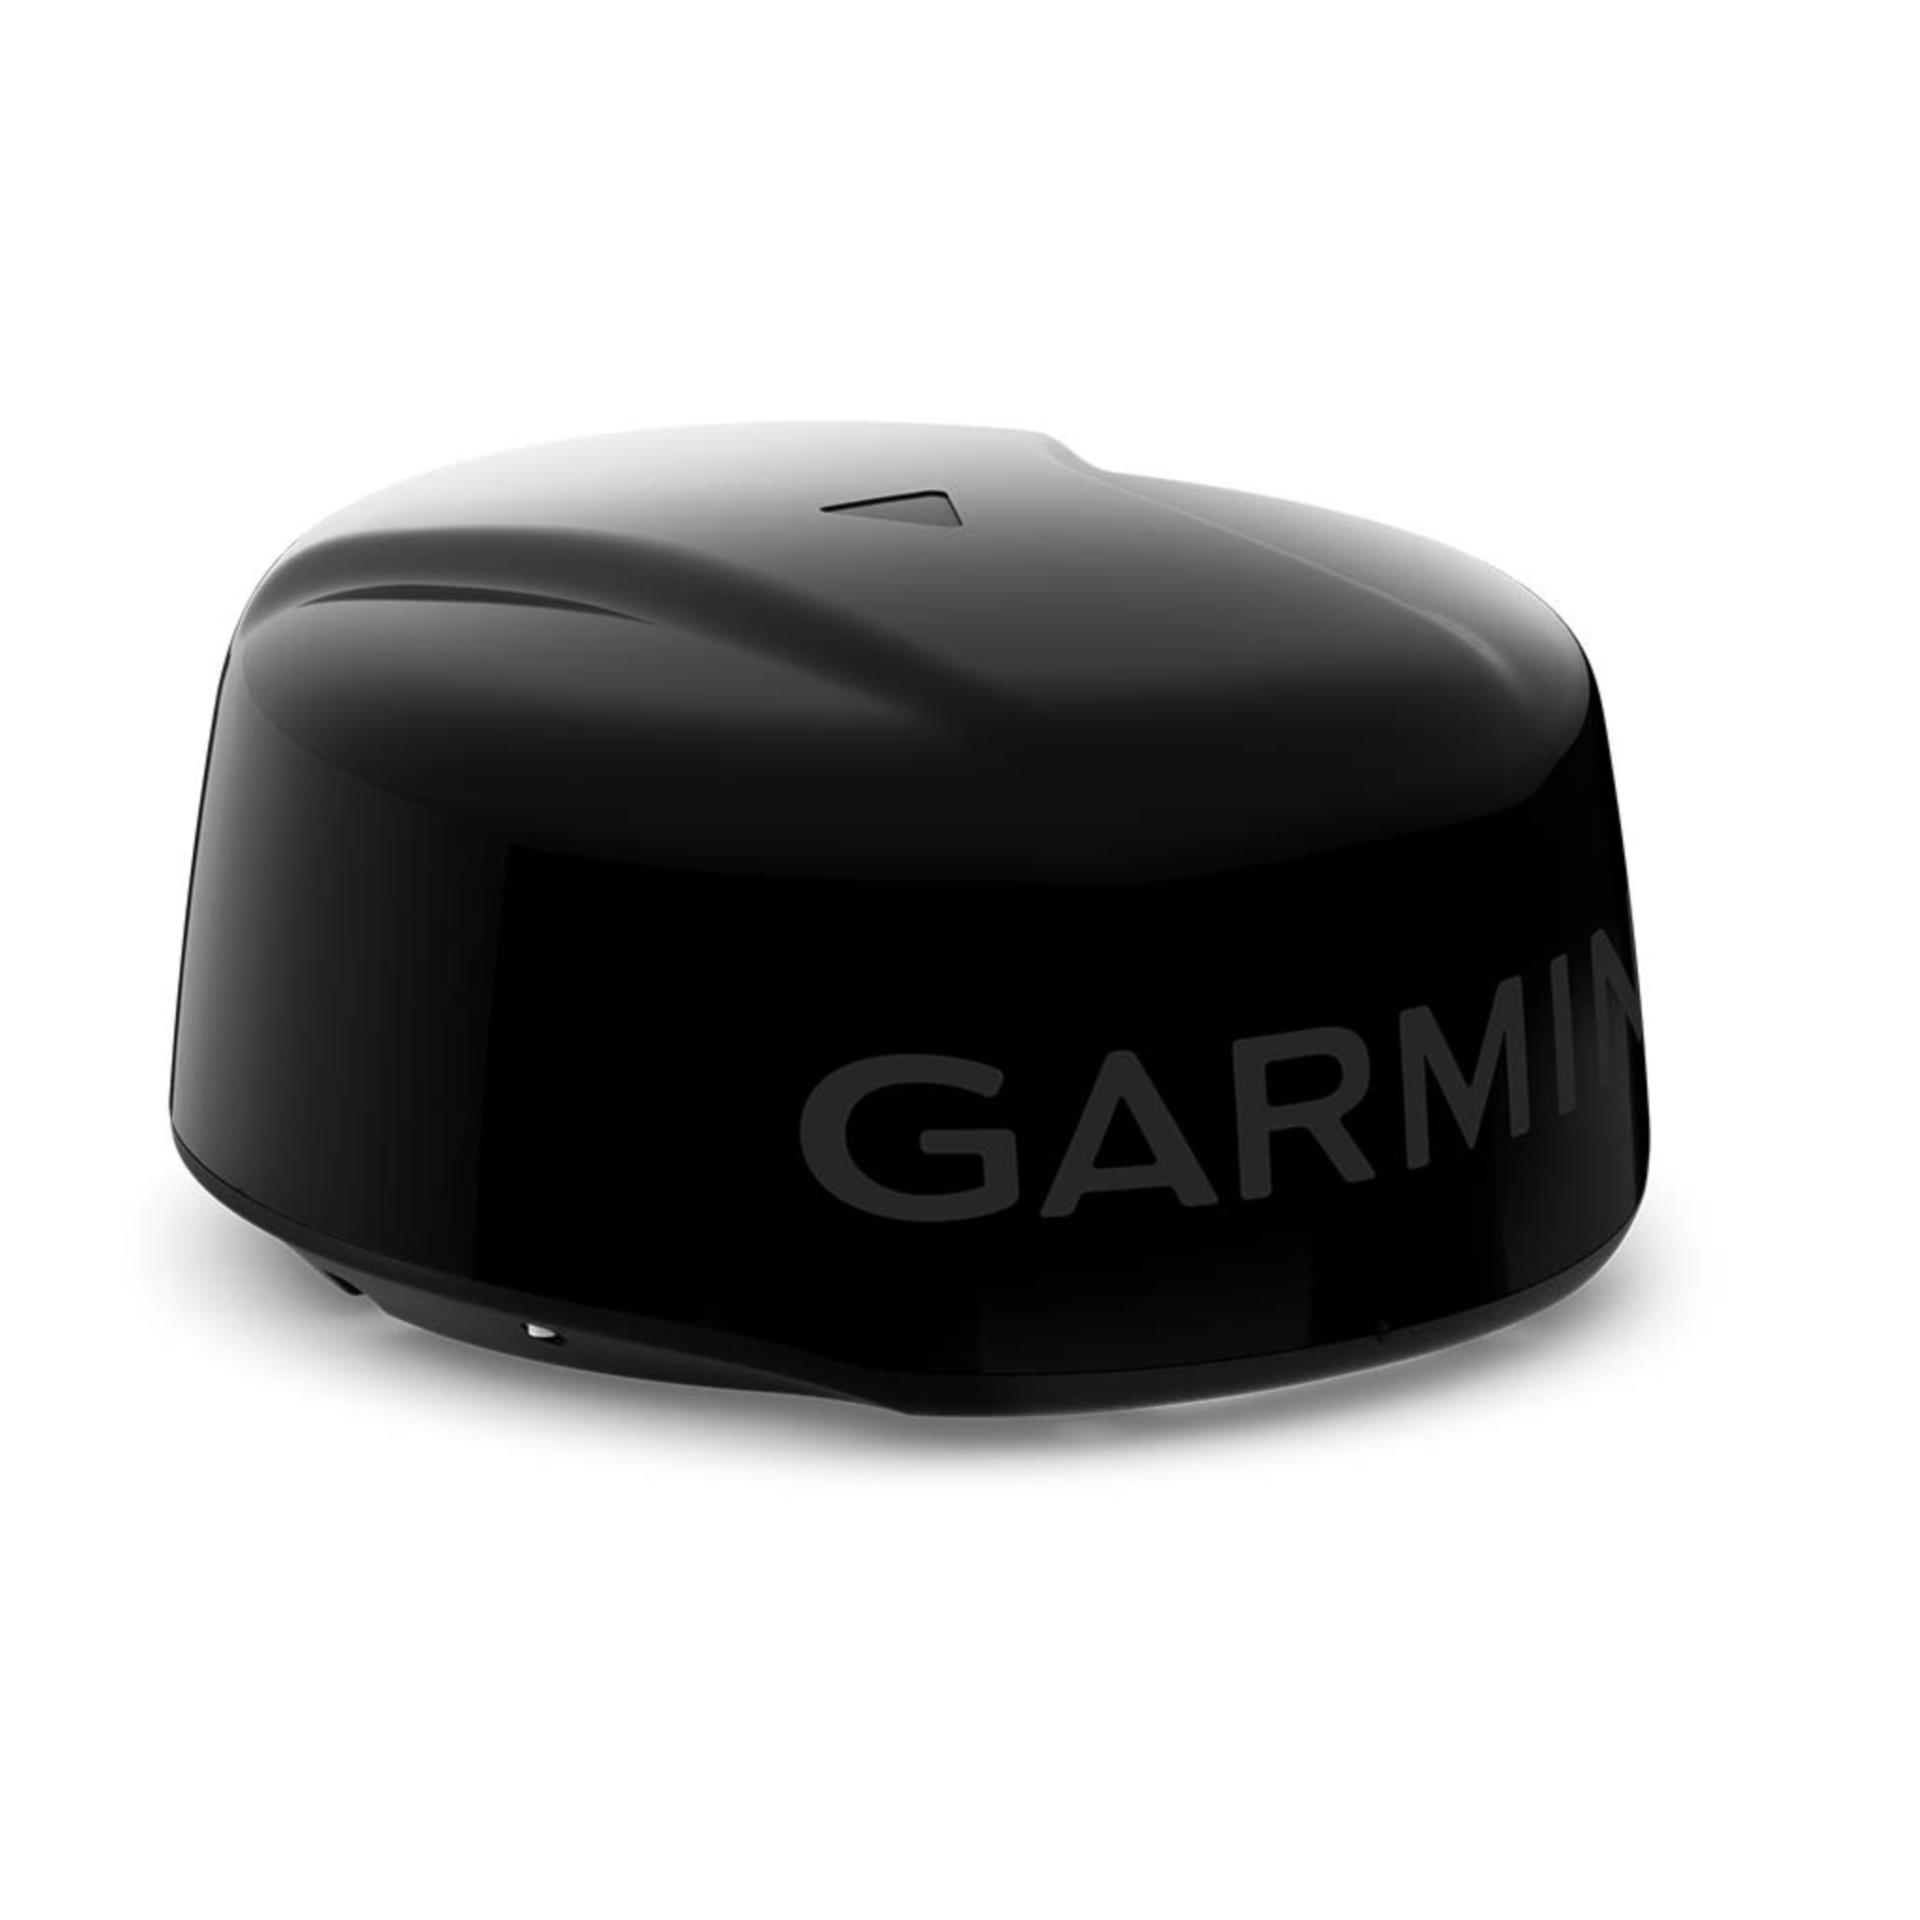 Garmin GMR Fantom™ 24x Radom schwarz